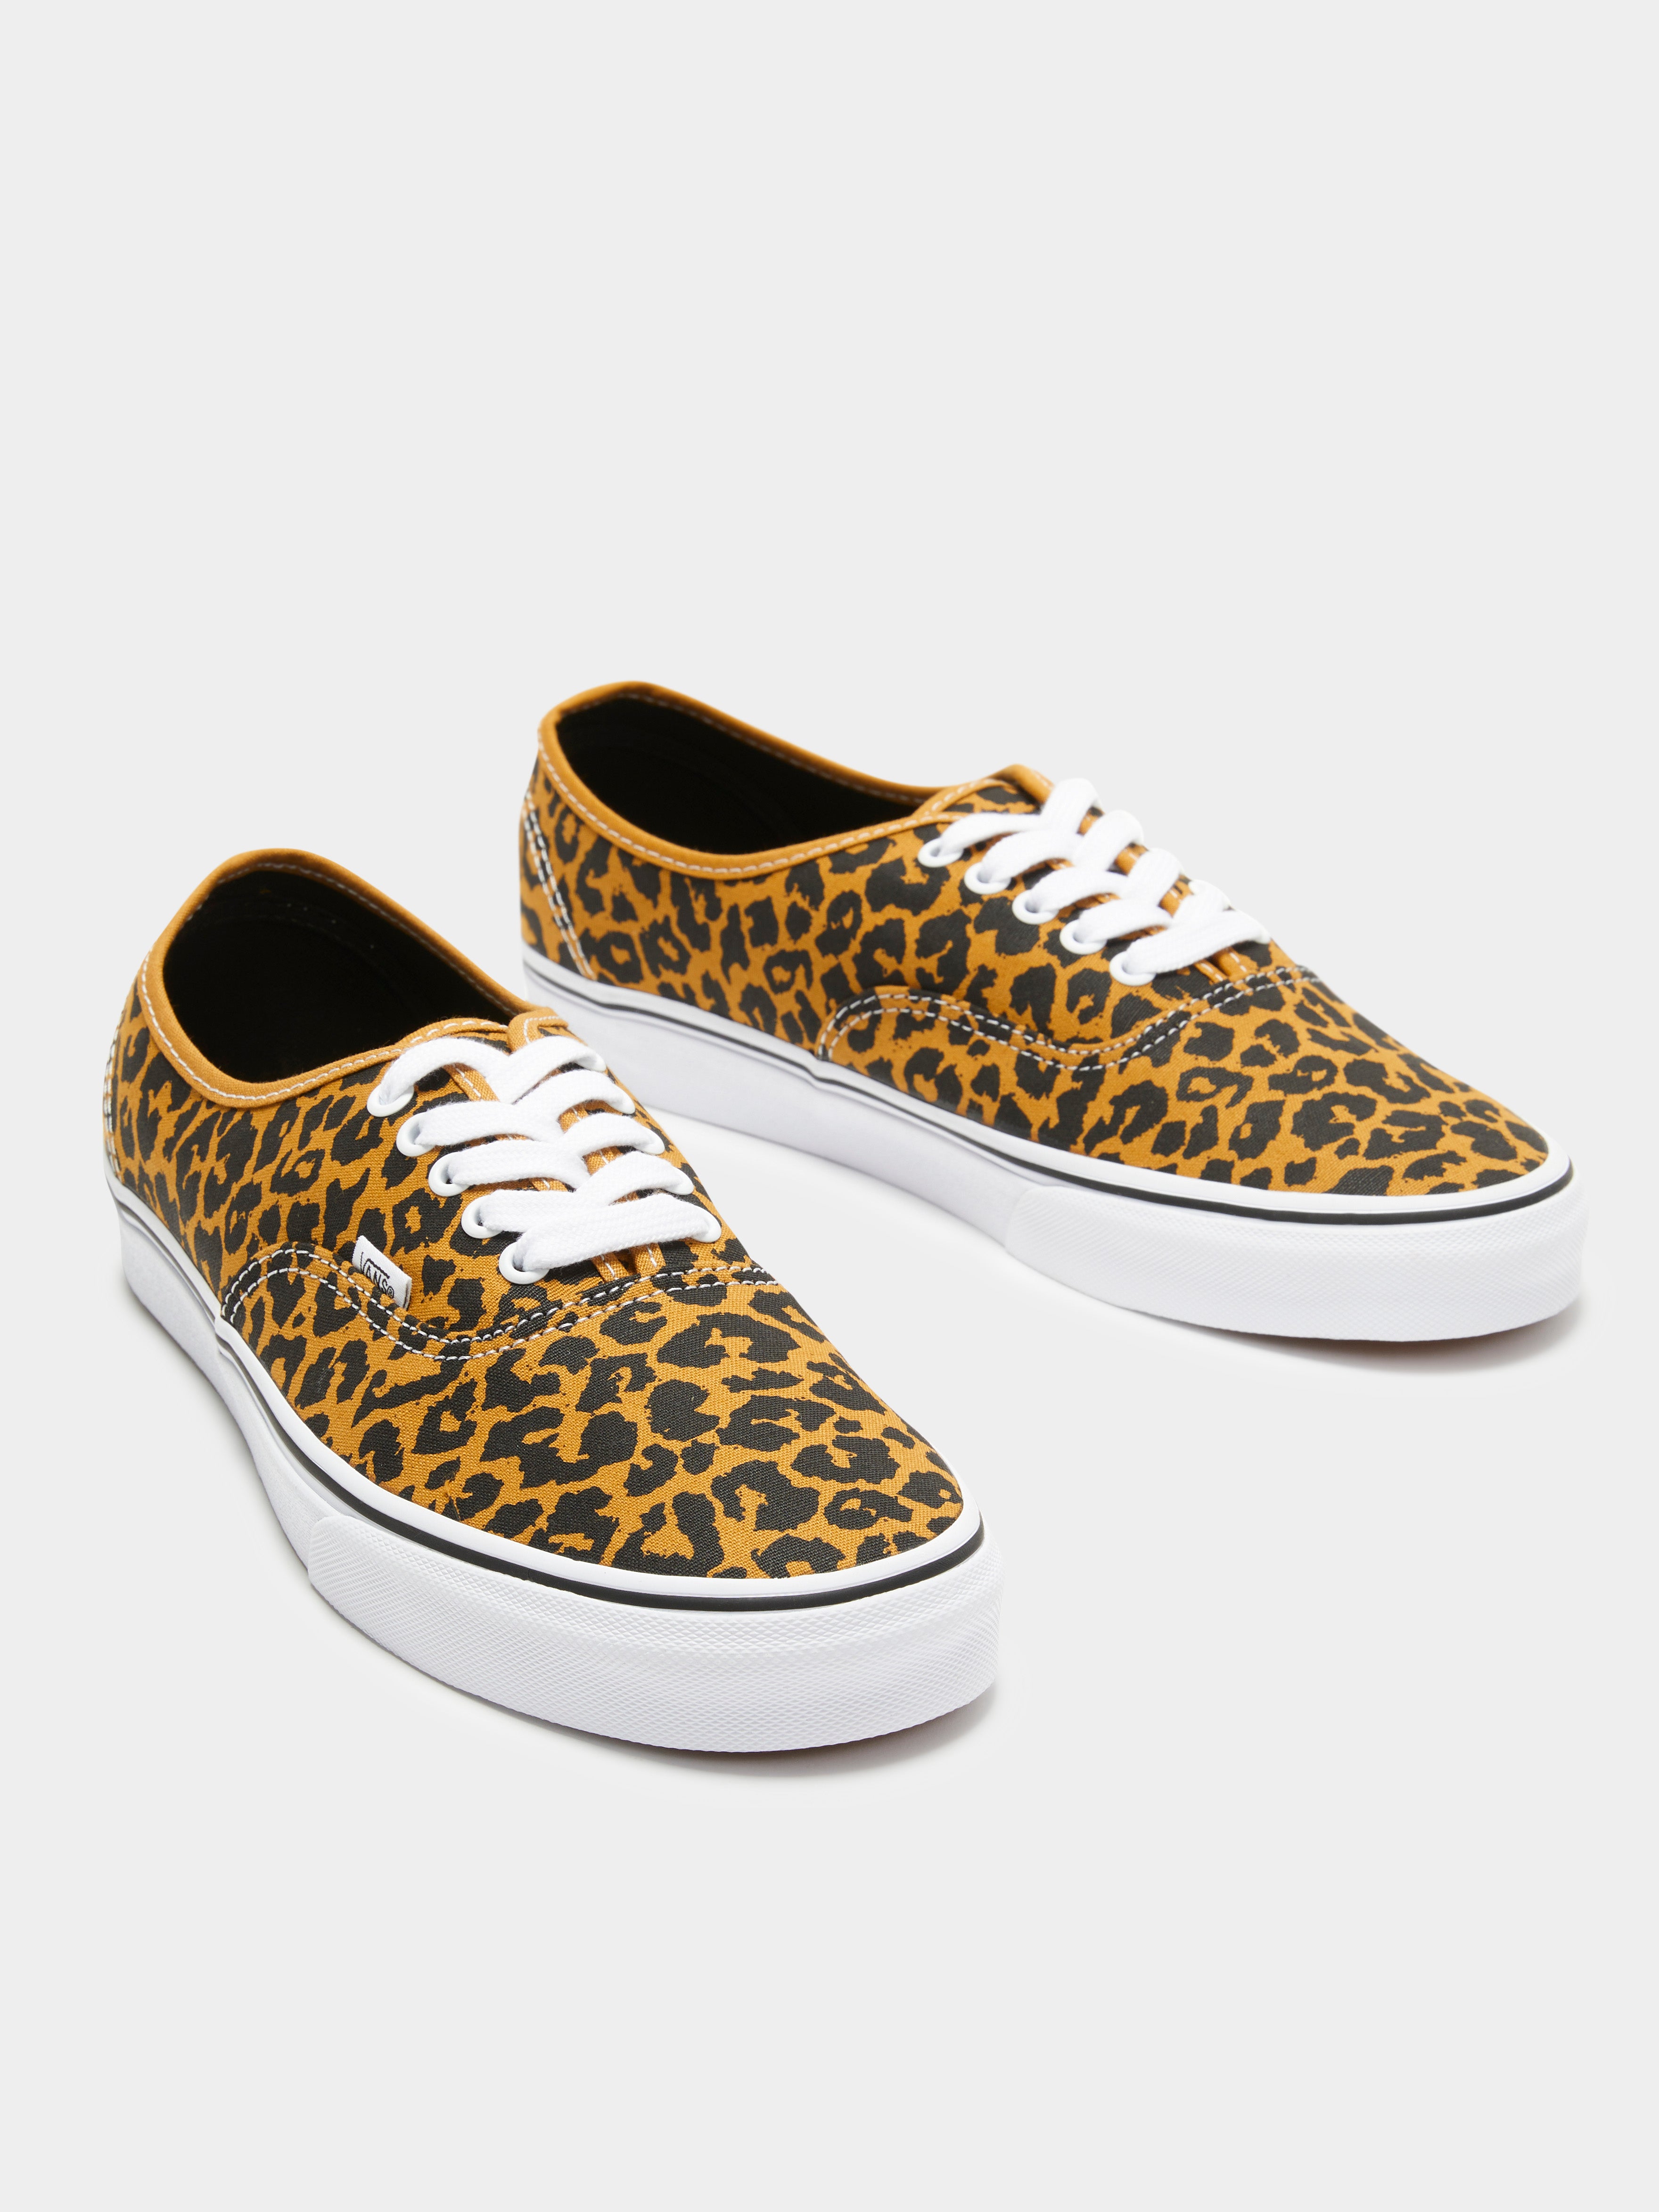 Unisex Authentic Leopard Sneakers in Leopard Black & White